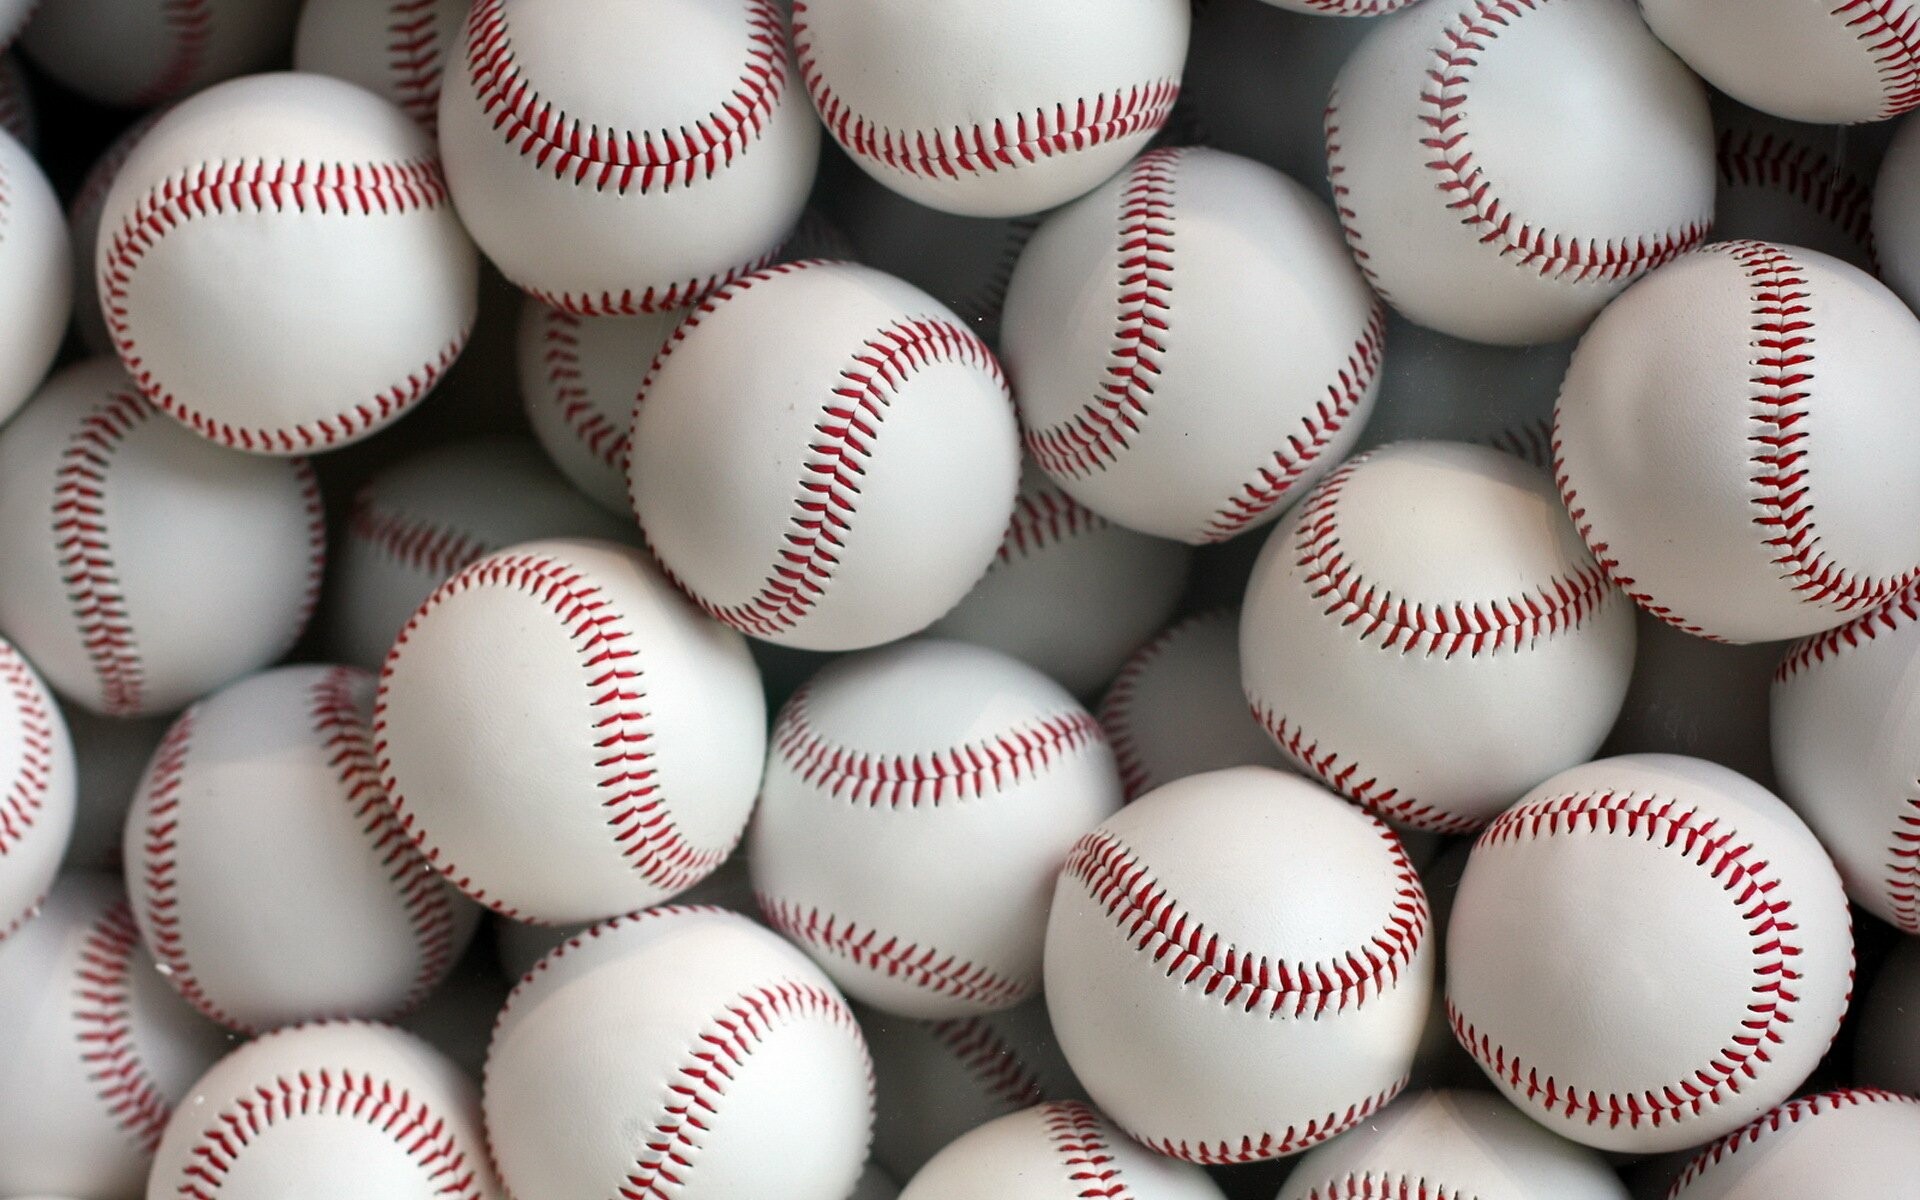 Baseball HD wallpapers, Baseball backgrounds, Baseball images, Sports, 1920x1200 HD Desktop